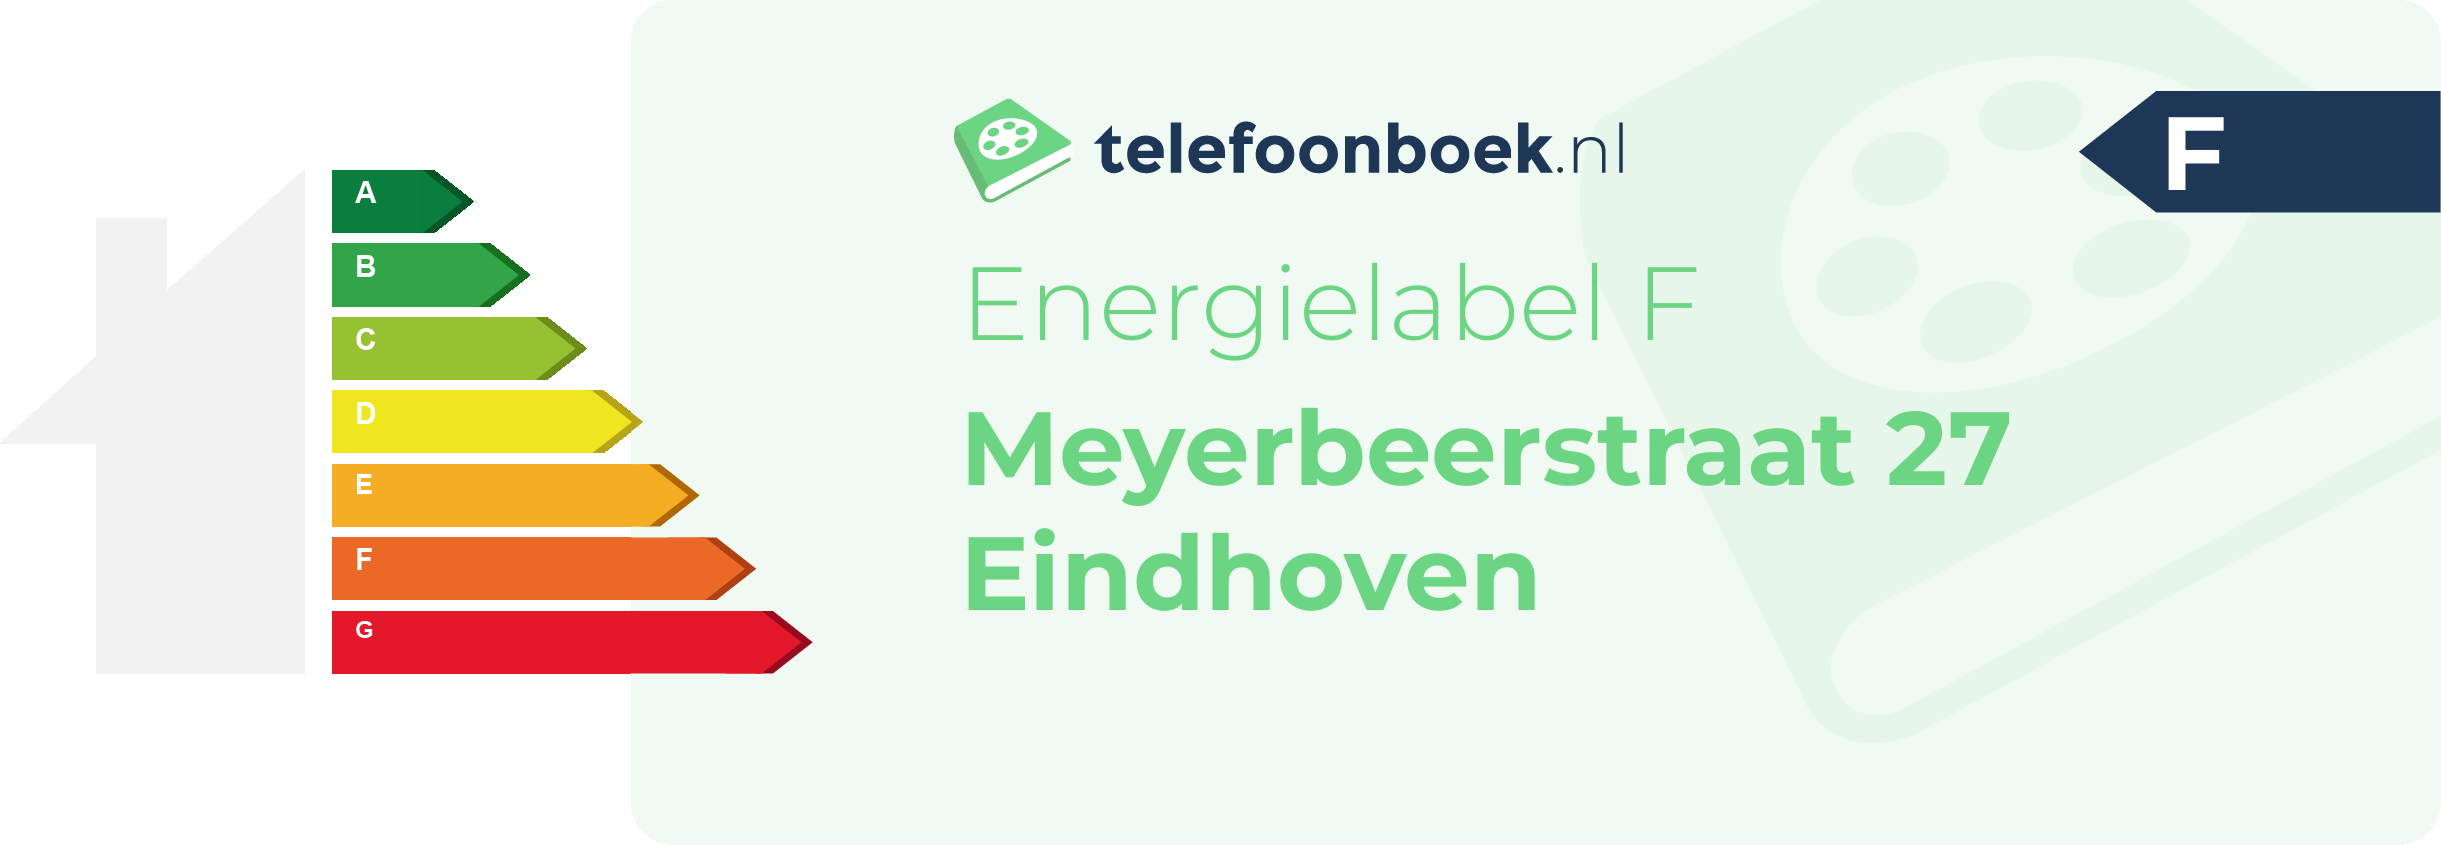 Energielabel Meyerbeerstraat 27 Eindhoven